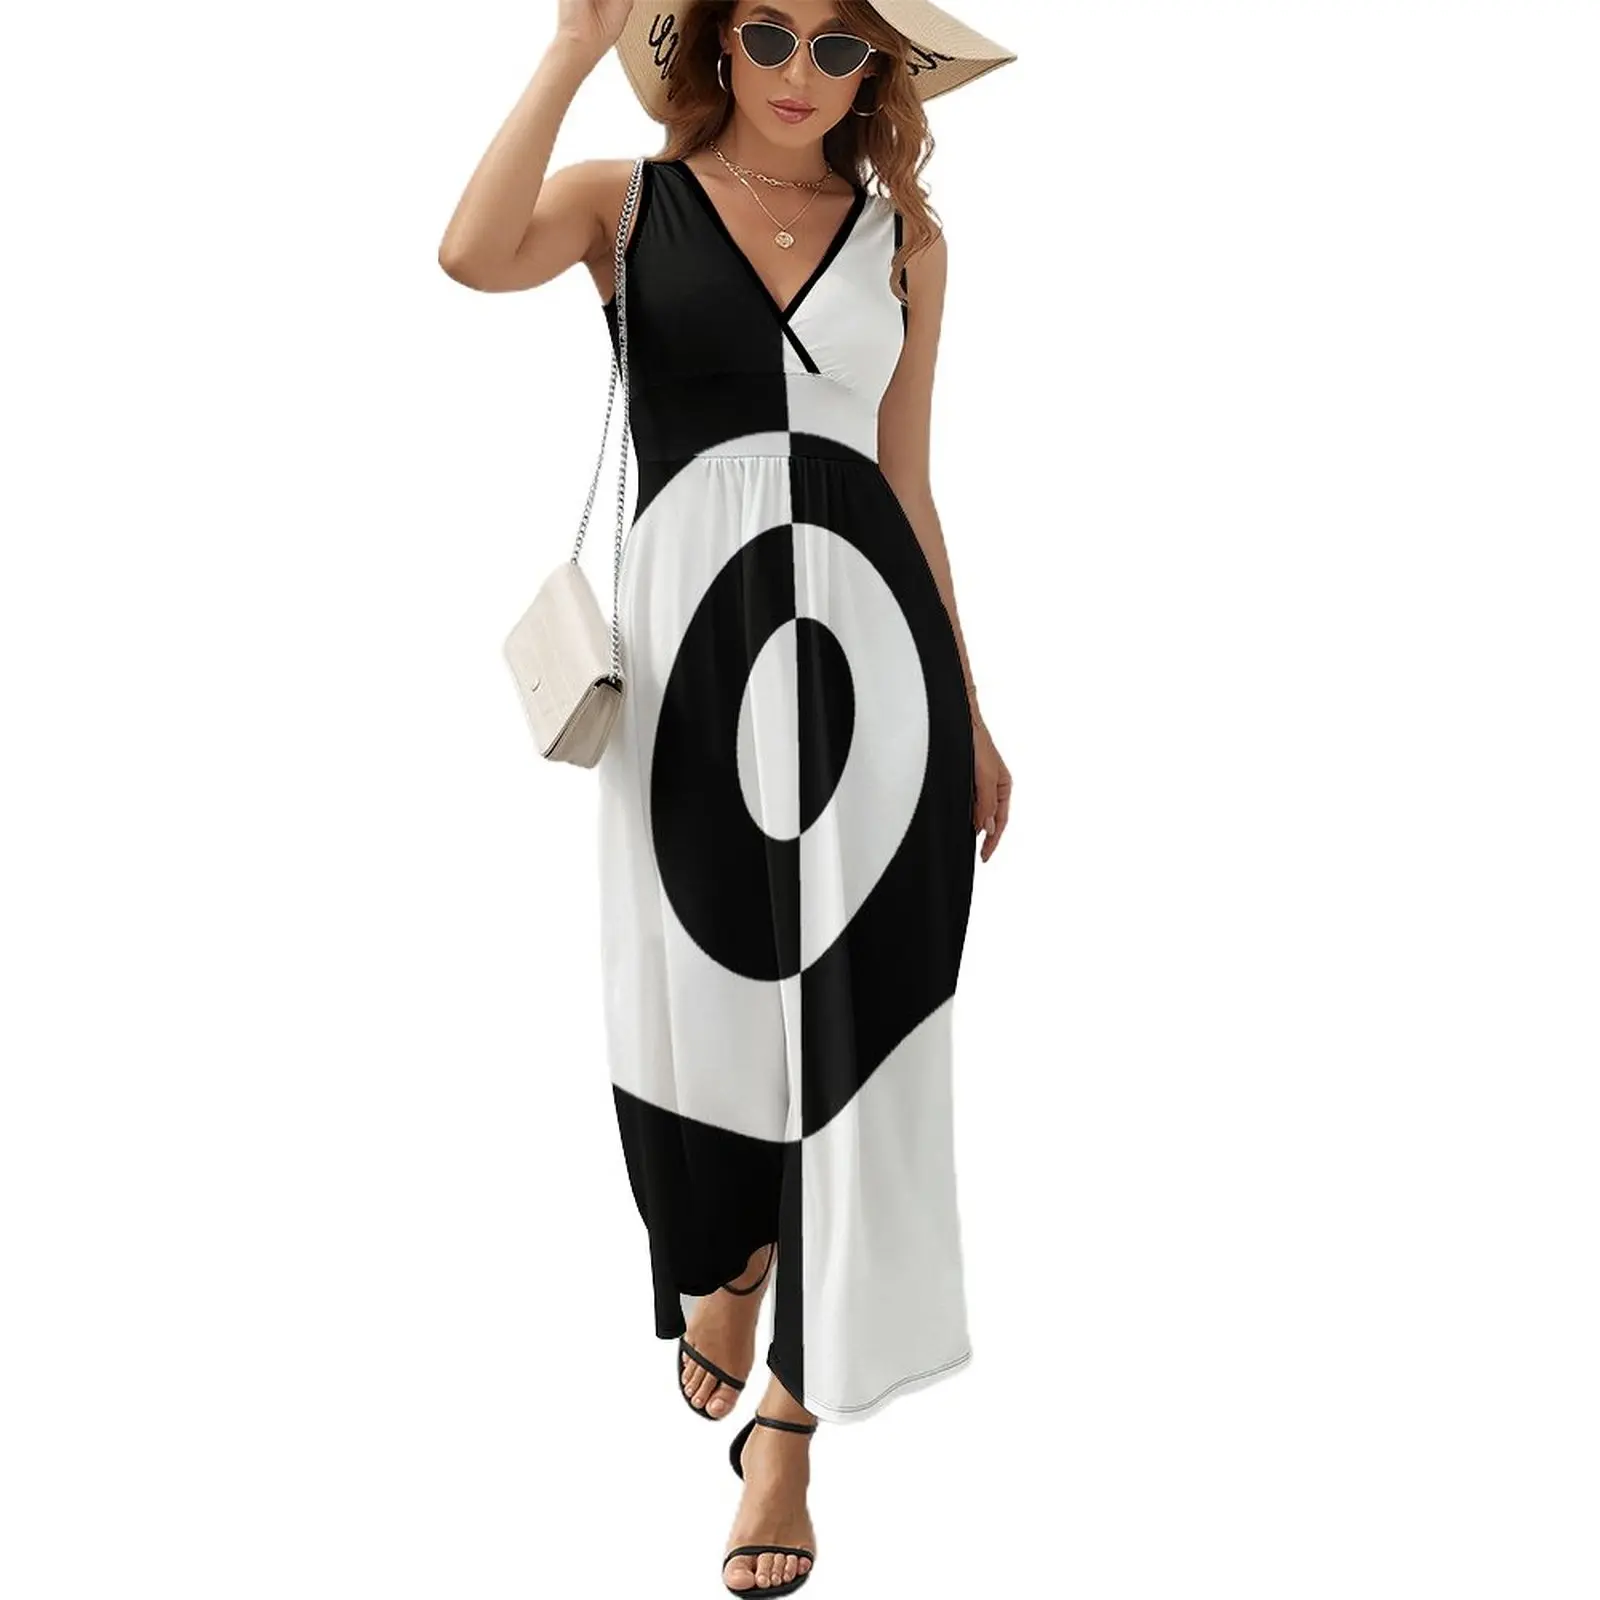 

Mod Target - Black & White Retro Invert Sleeveless Dress Woman dresses long dresses for women Woman fashion